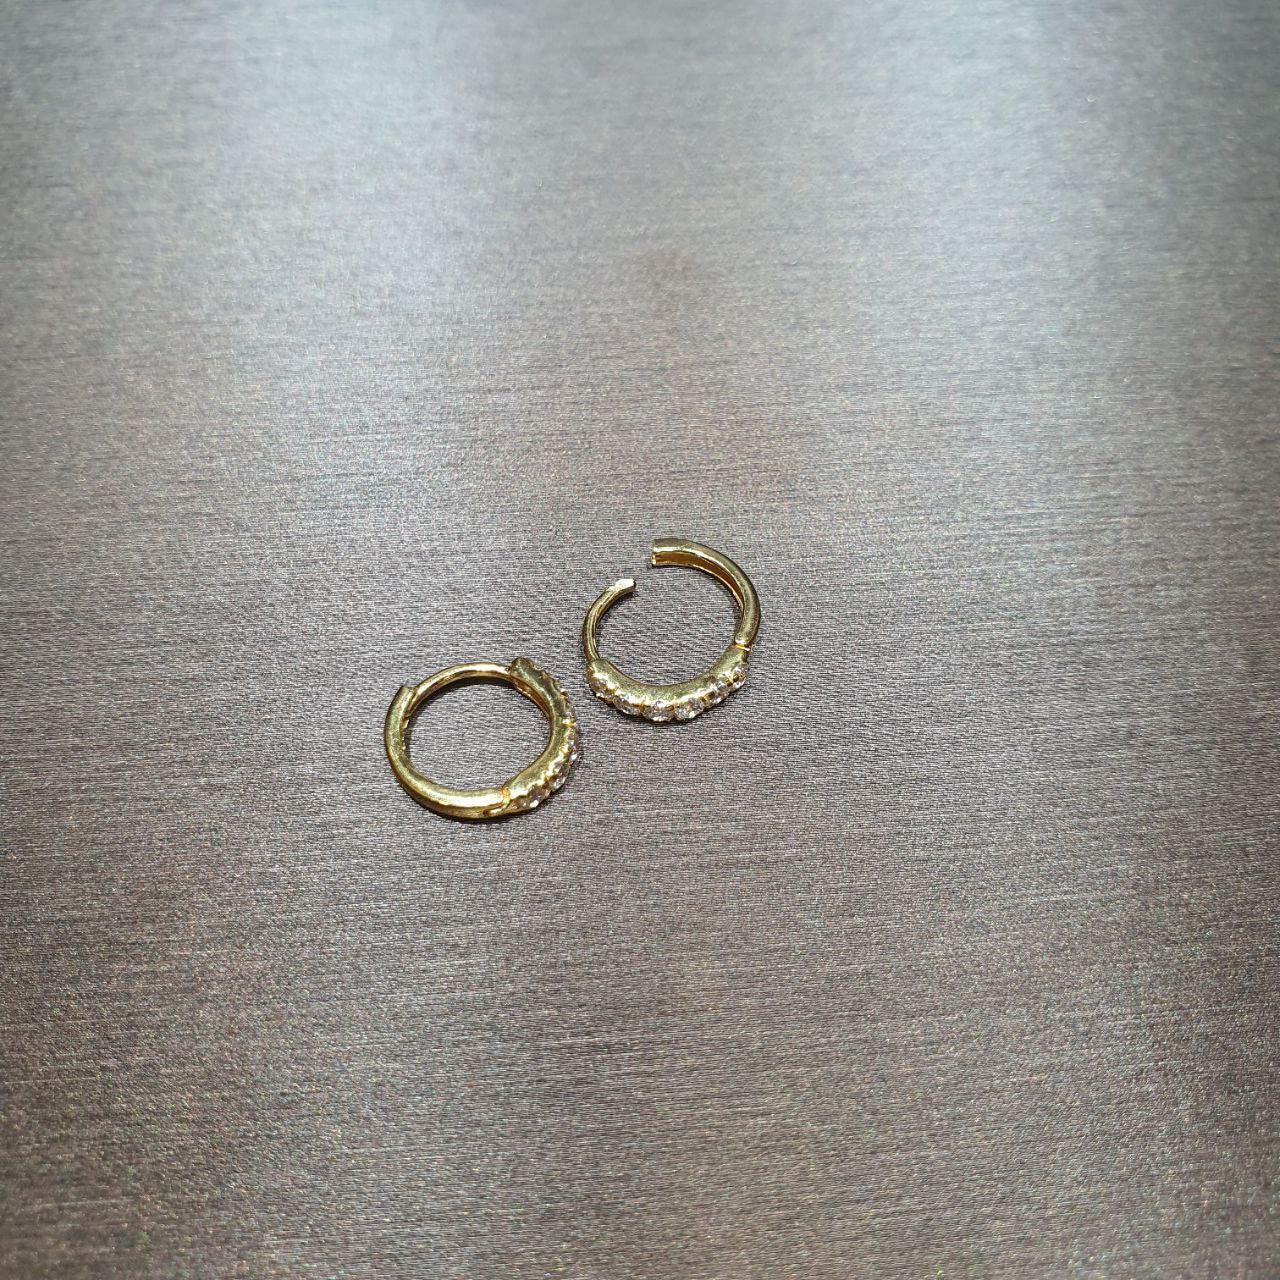 22k / 916 Gold Loop Crystal Earring-Earrings-Best Gold Shop